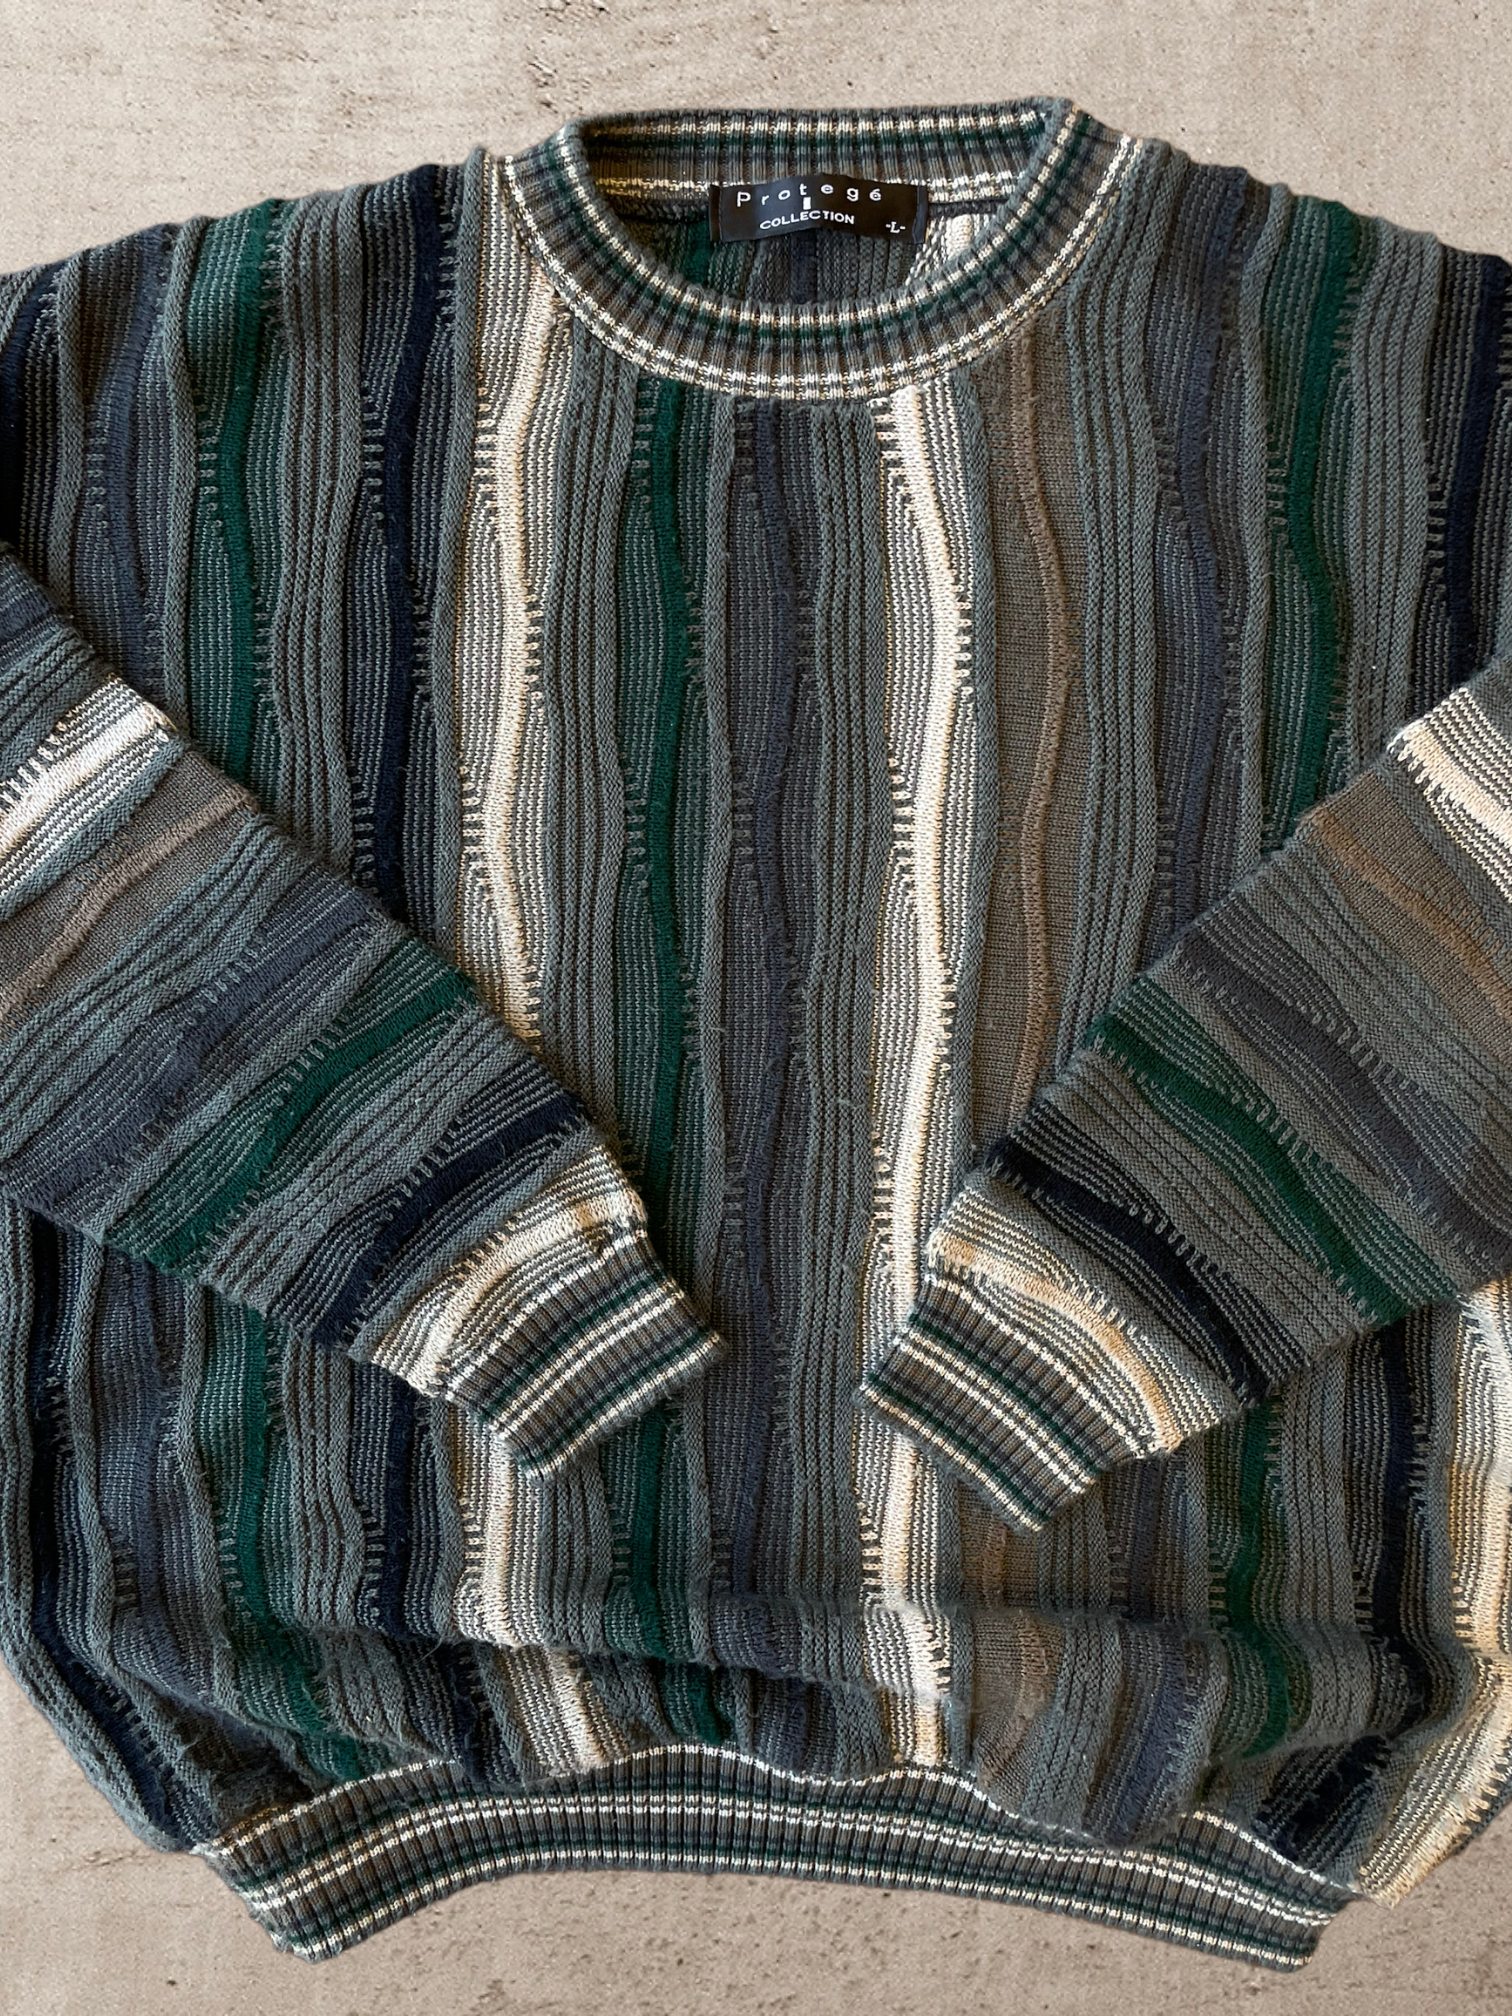 90s Multicolored Knit Protegé Sweater - Large